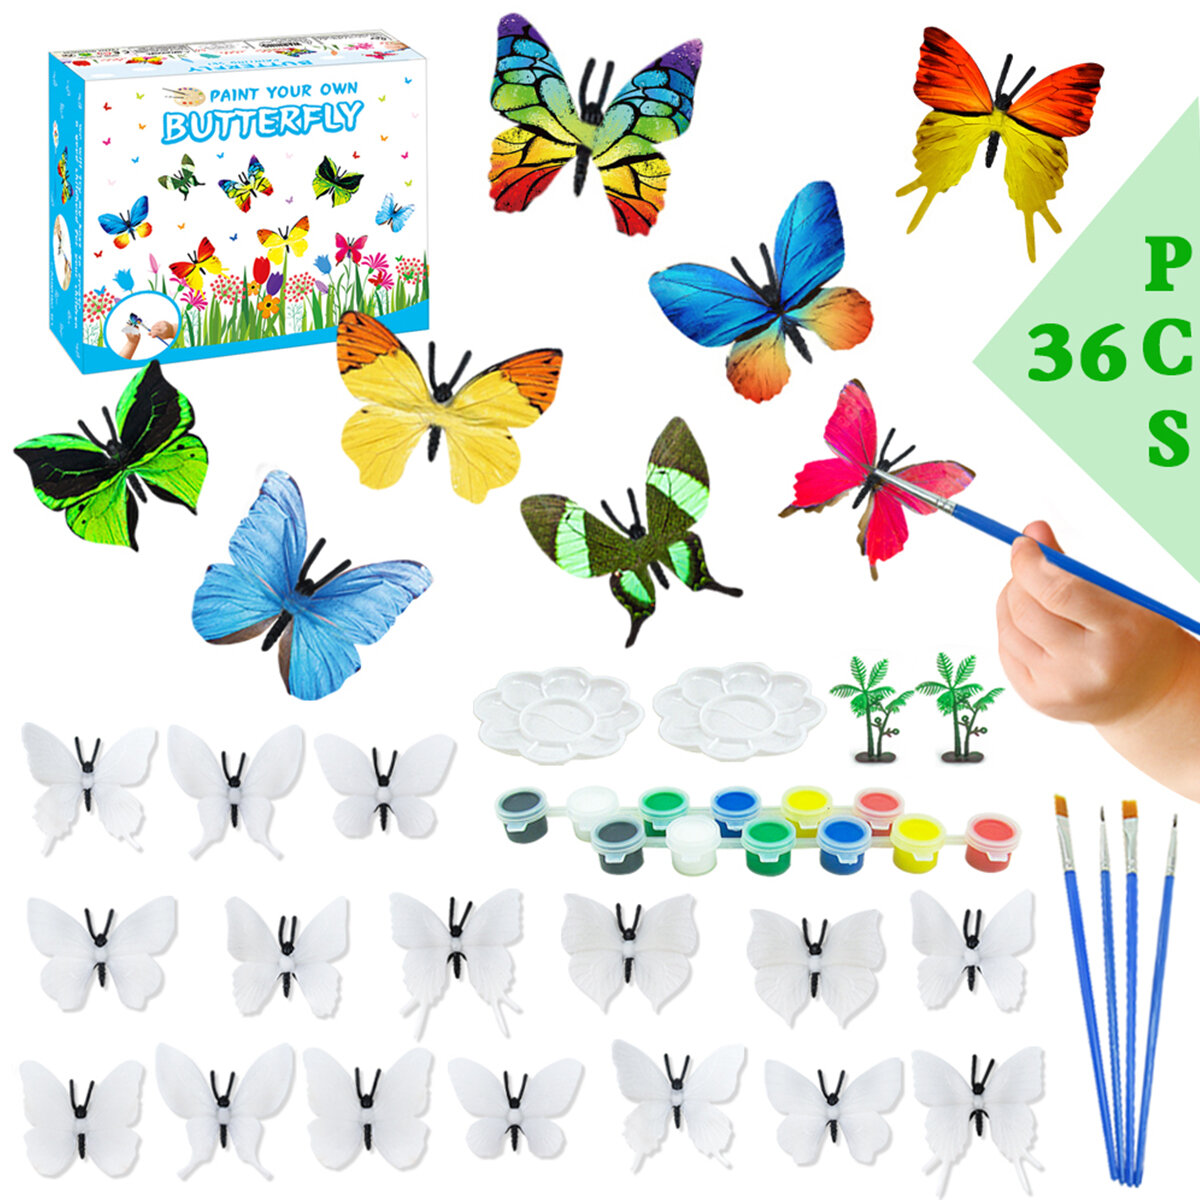 36Pcs/set DIY Painting Butterflies Hand-painted Paint Art Crafts Graffiti Pigment Set Kids Children Educational Toys, Banggood  - buy with discount